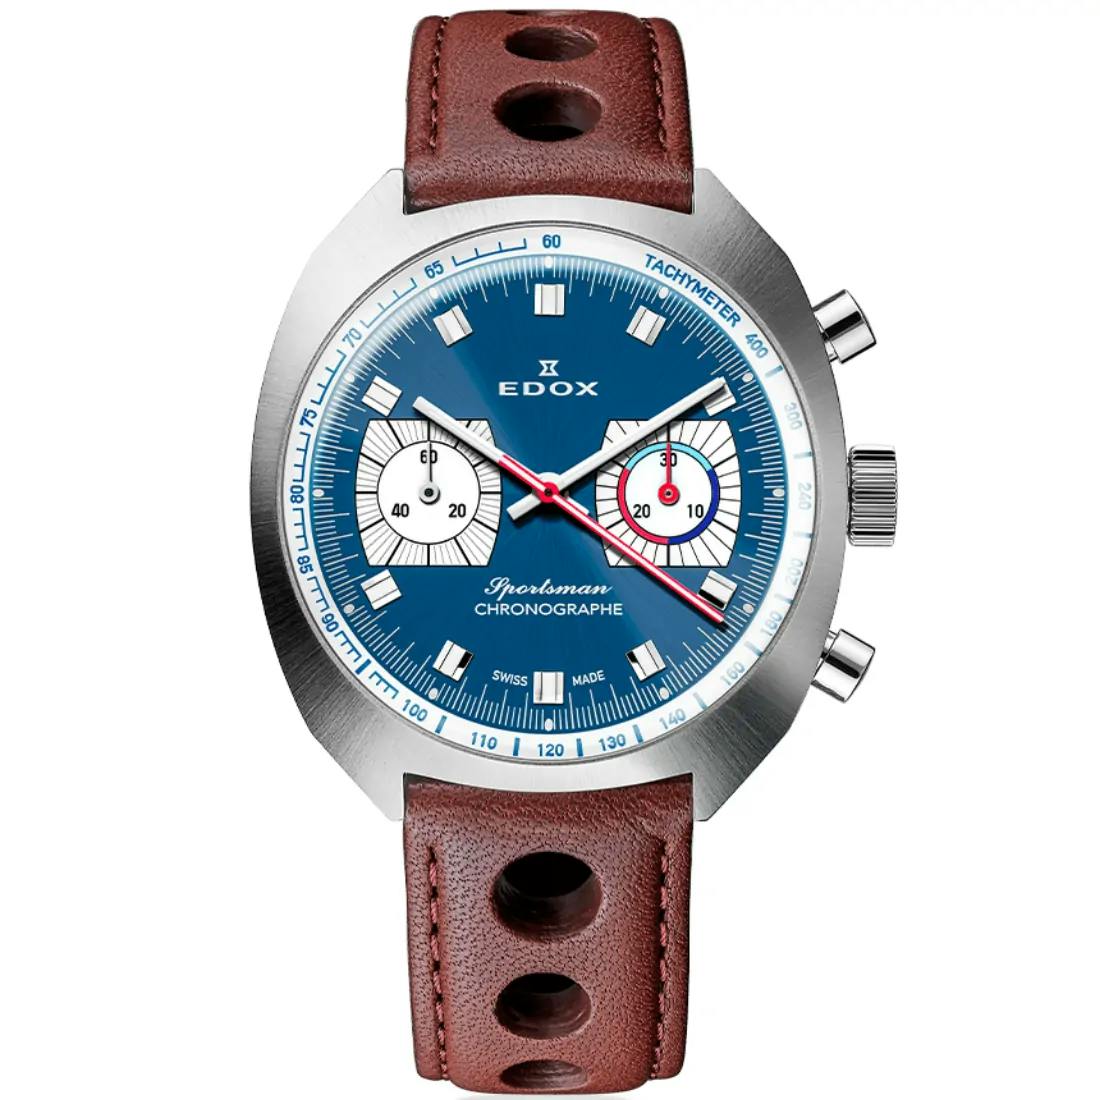 Reloj Edox Sportsman Chronographe 08202-3BU-BUIN